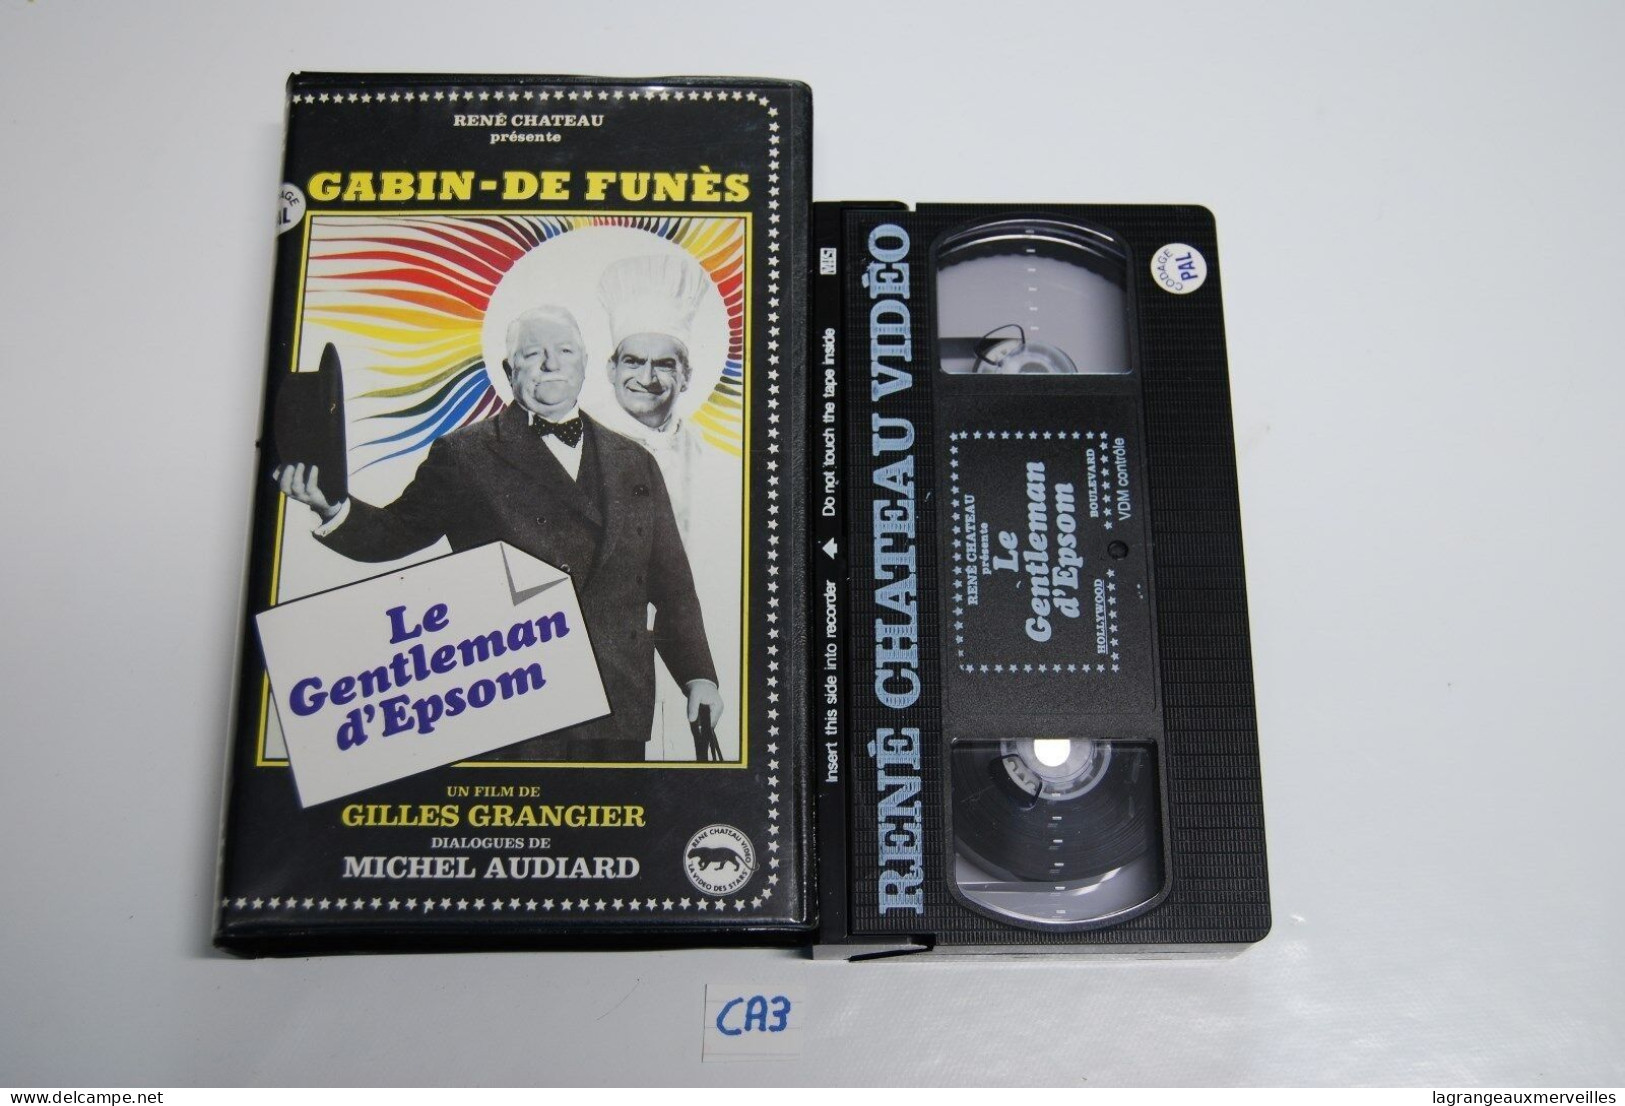 CA3 K7 VIDEO VHS GABIN DEFUNES LE GENTLEMAN D'EPSOM - Comedy